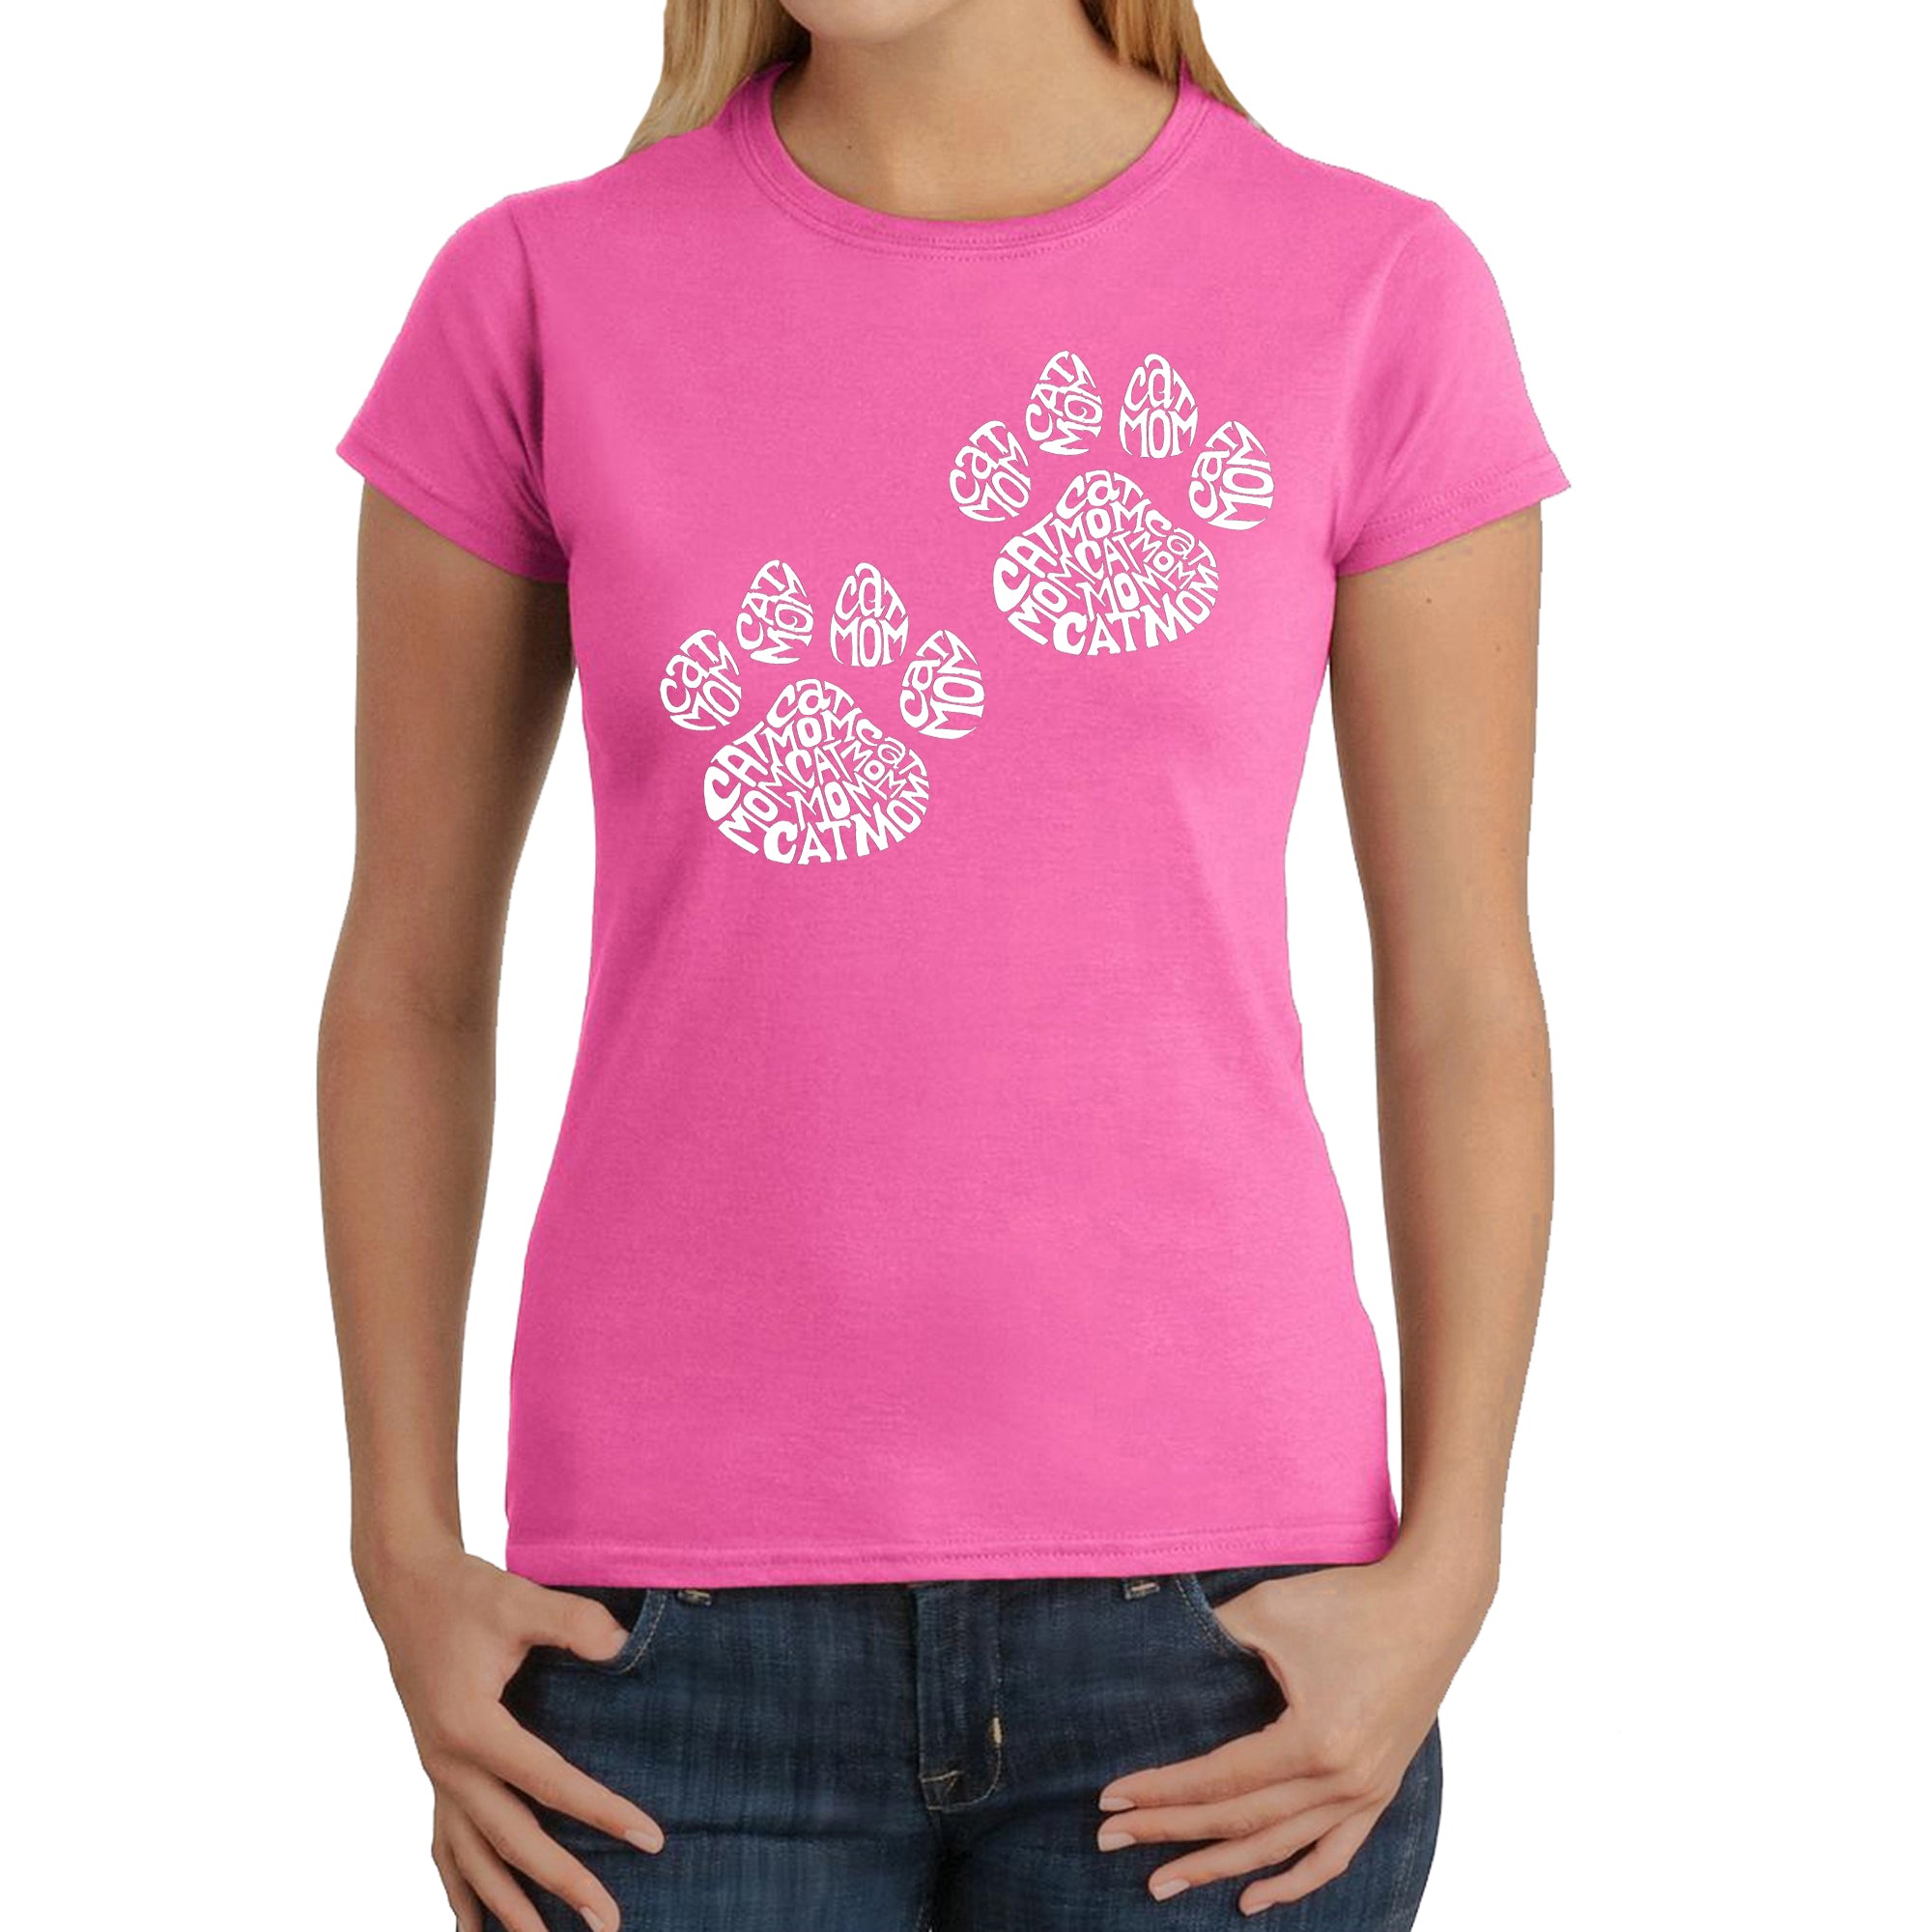 Cat Mom - Women's Word Art T-Shirt - Pink - XS